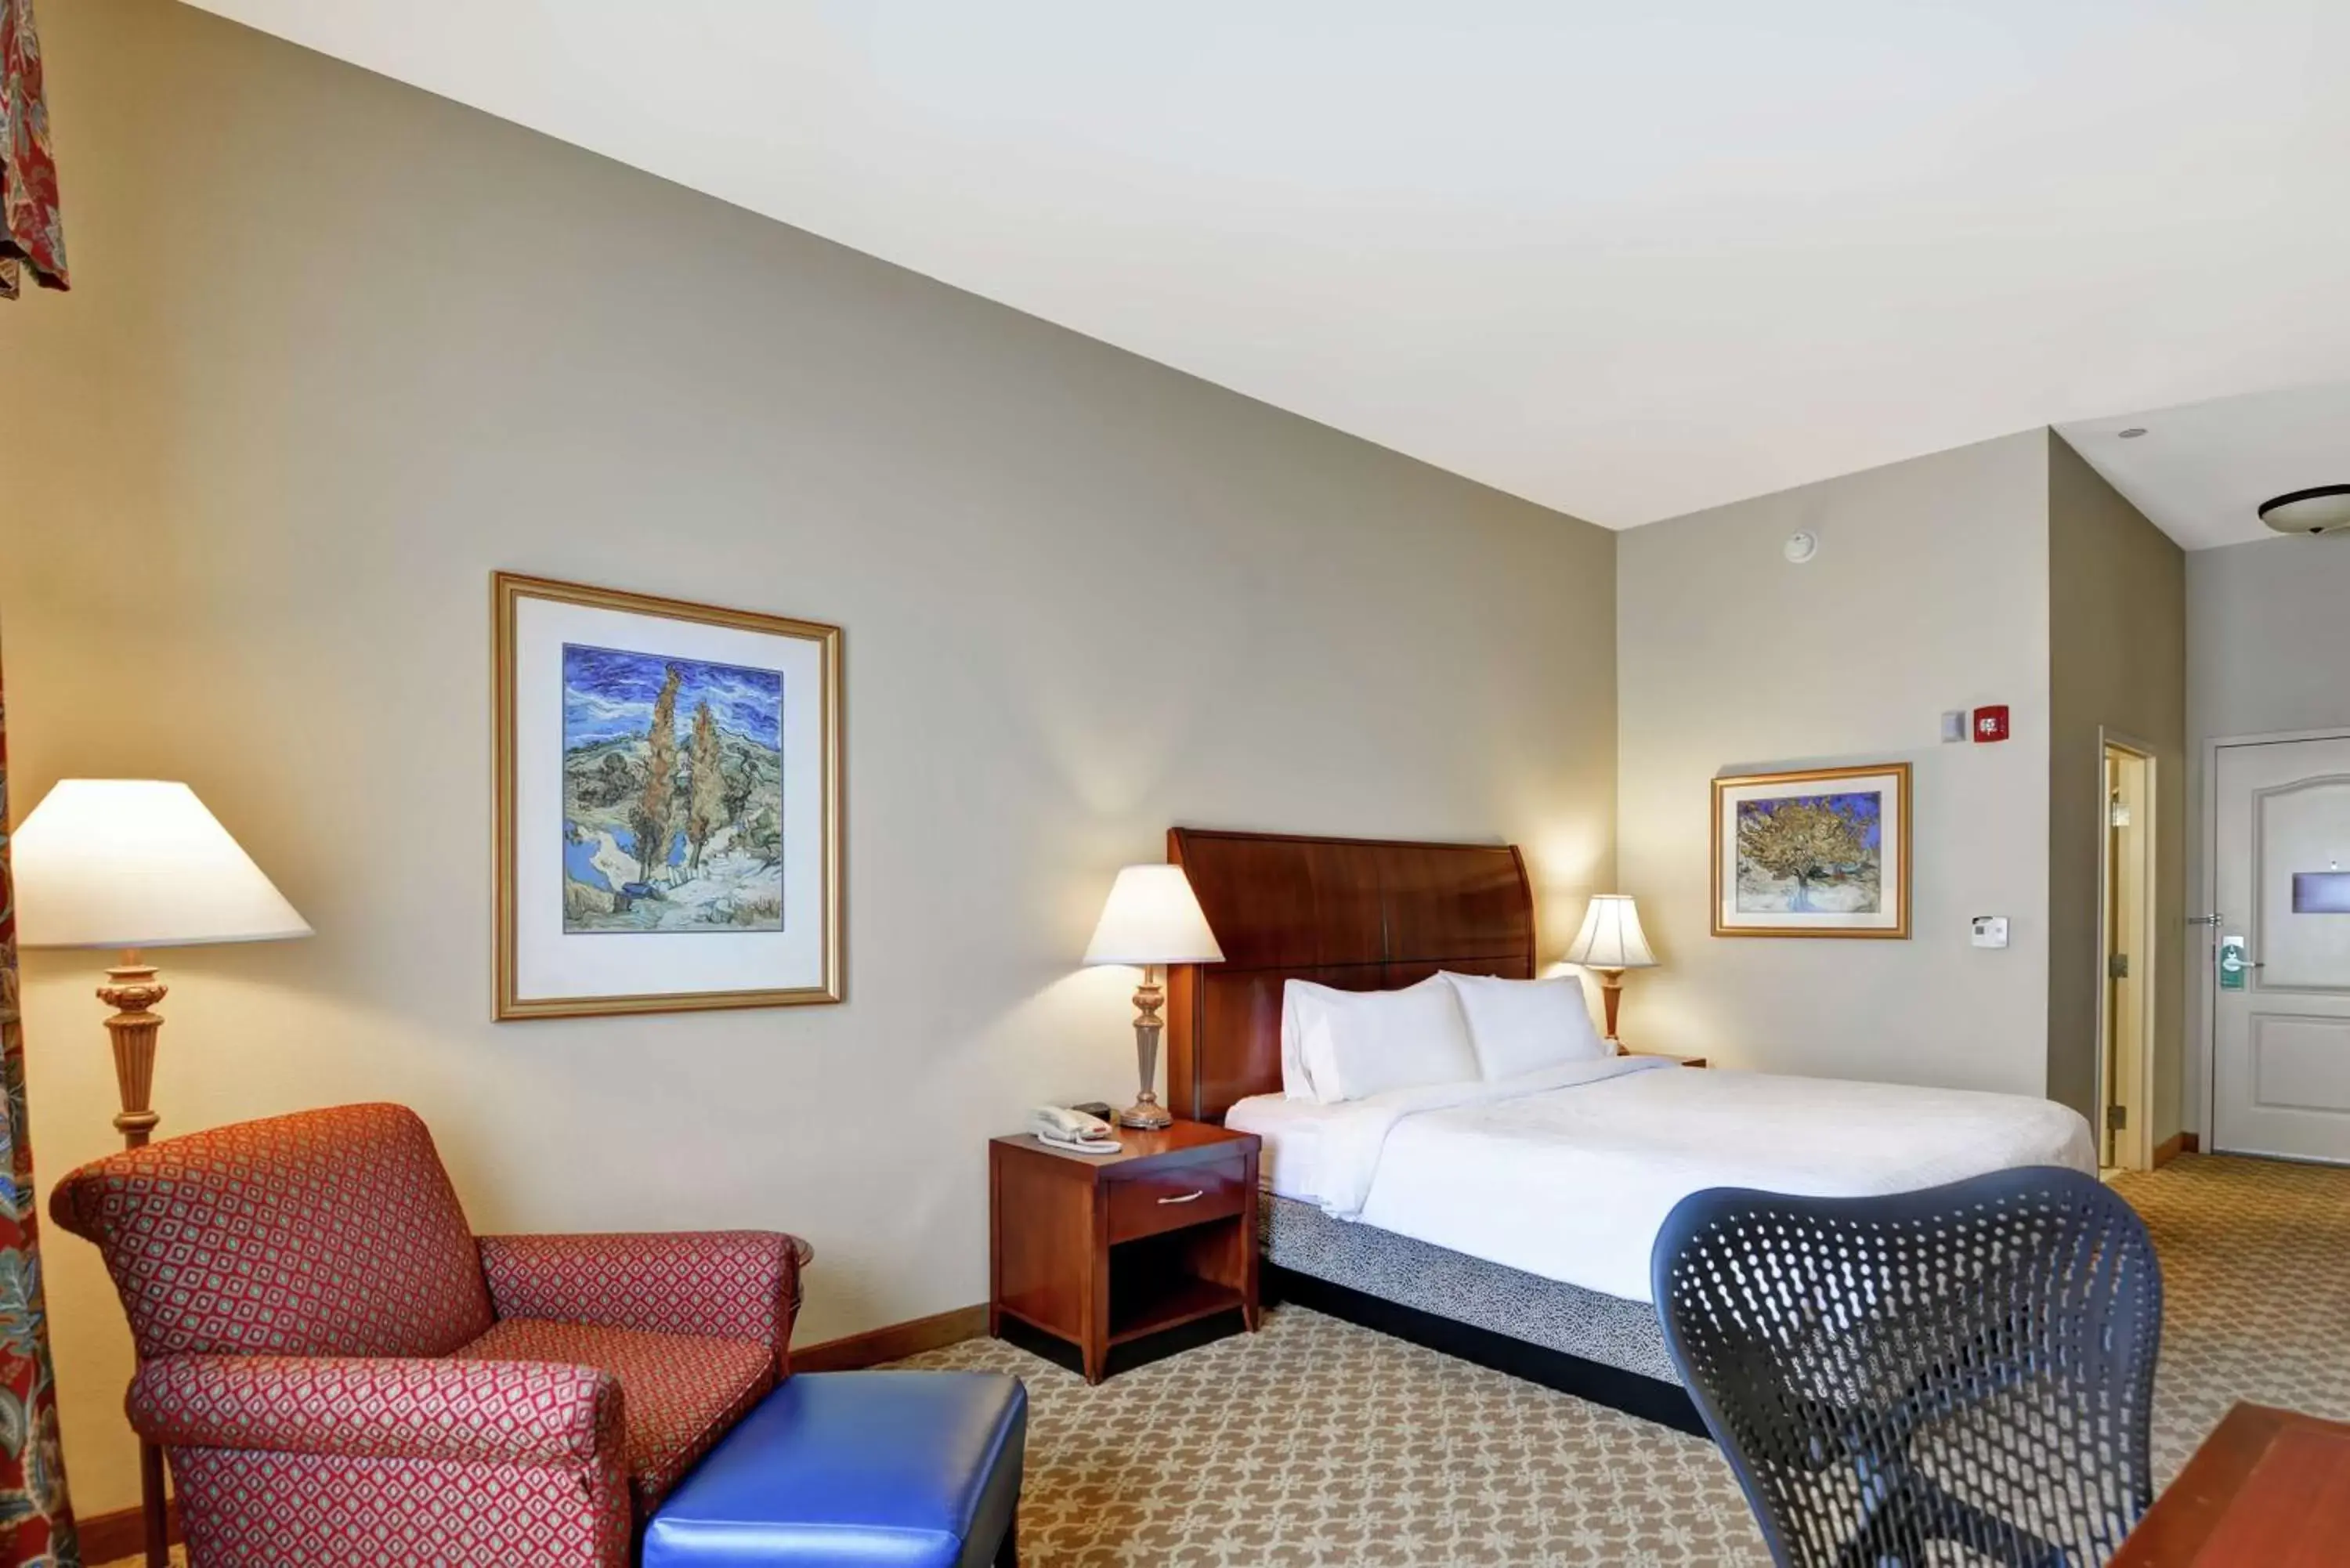 Bedroom in Hilton Garden Inn Amarillo